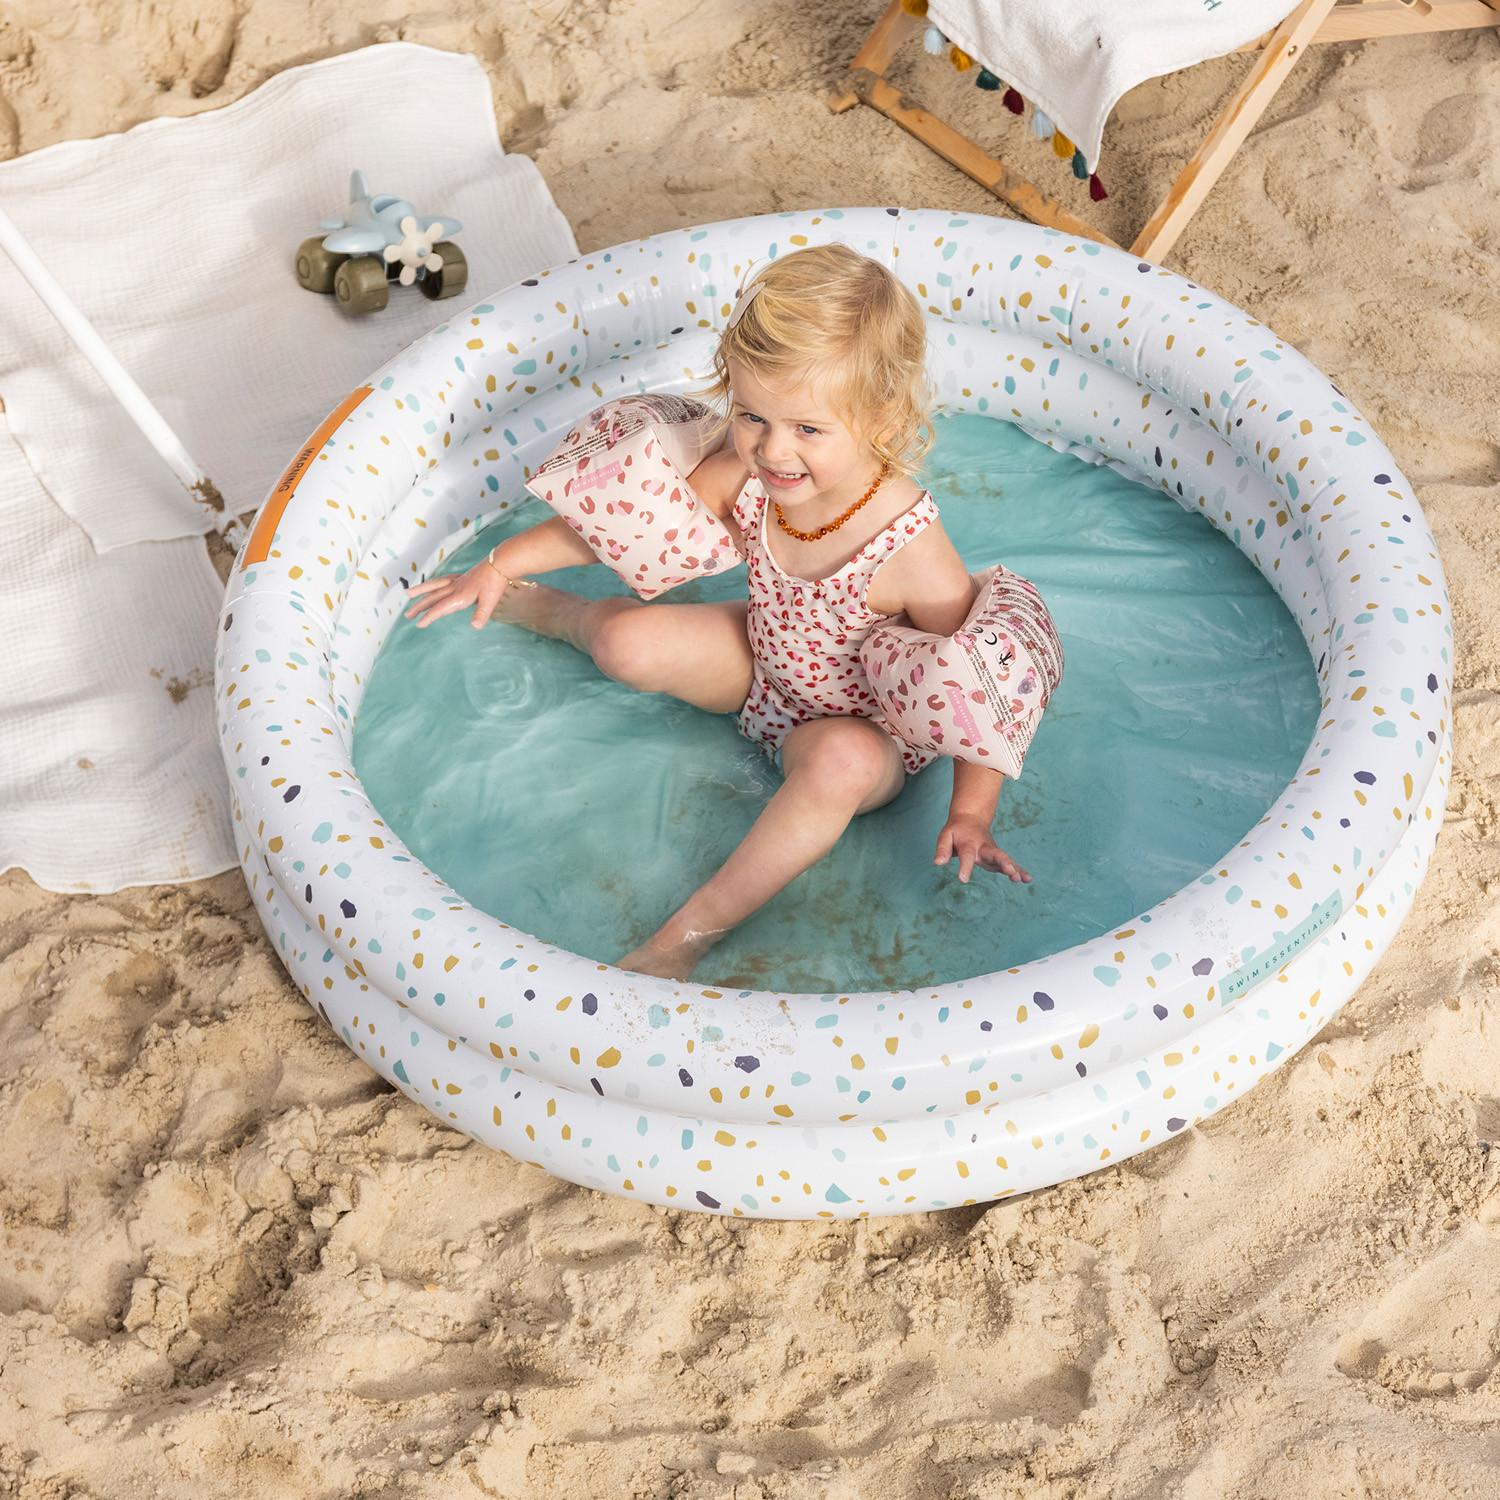 Swim Essentials  Baby Pool 100cm White Terrazzo 